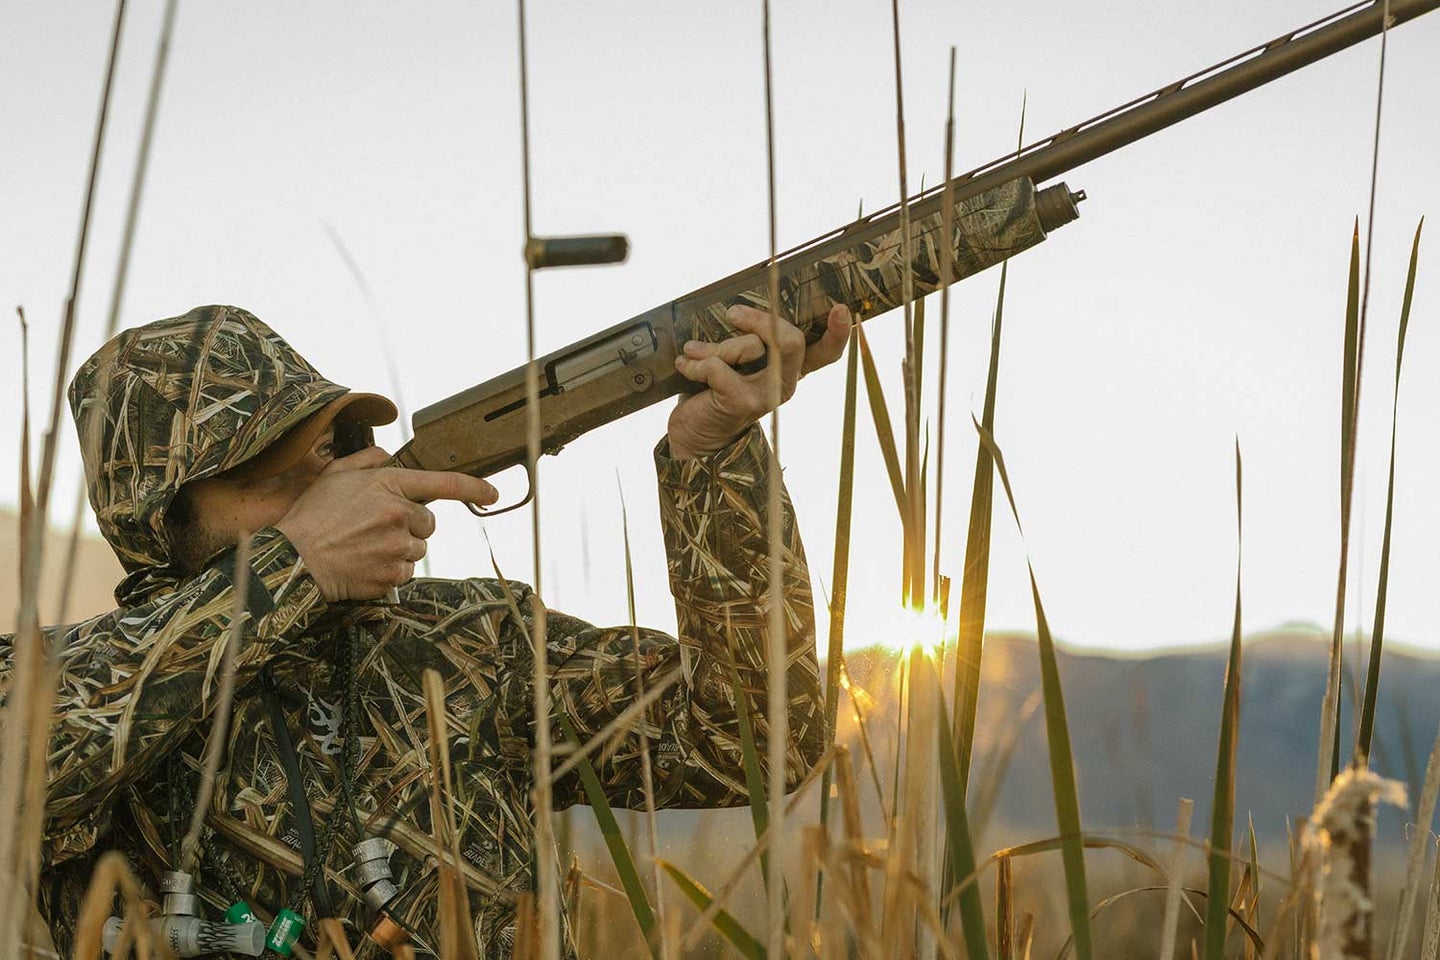 A hunter with a shotgun aims it into the air.